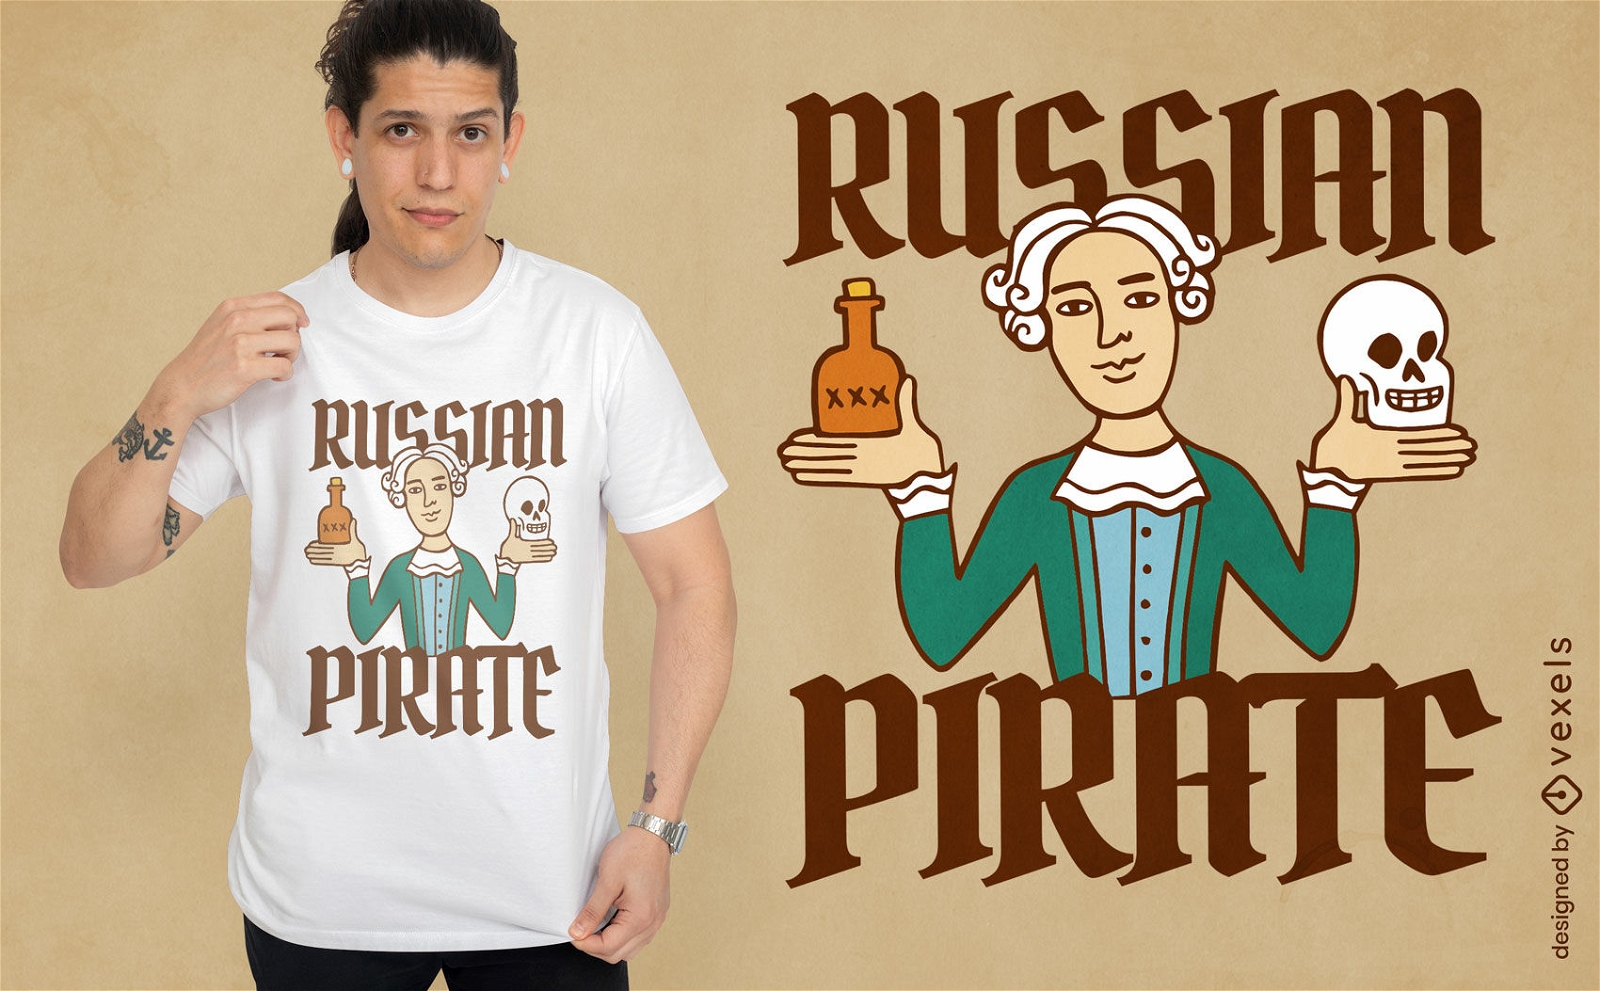 Russian pirate t-shirt design